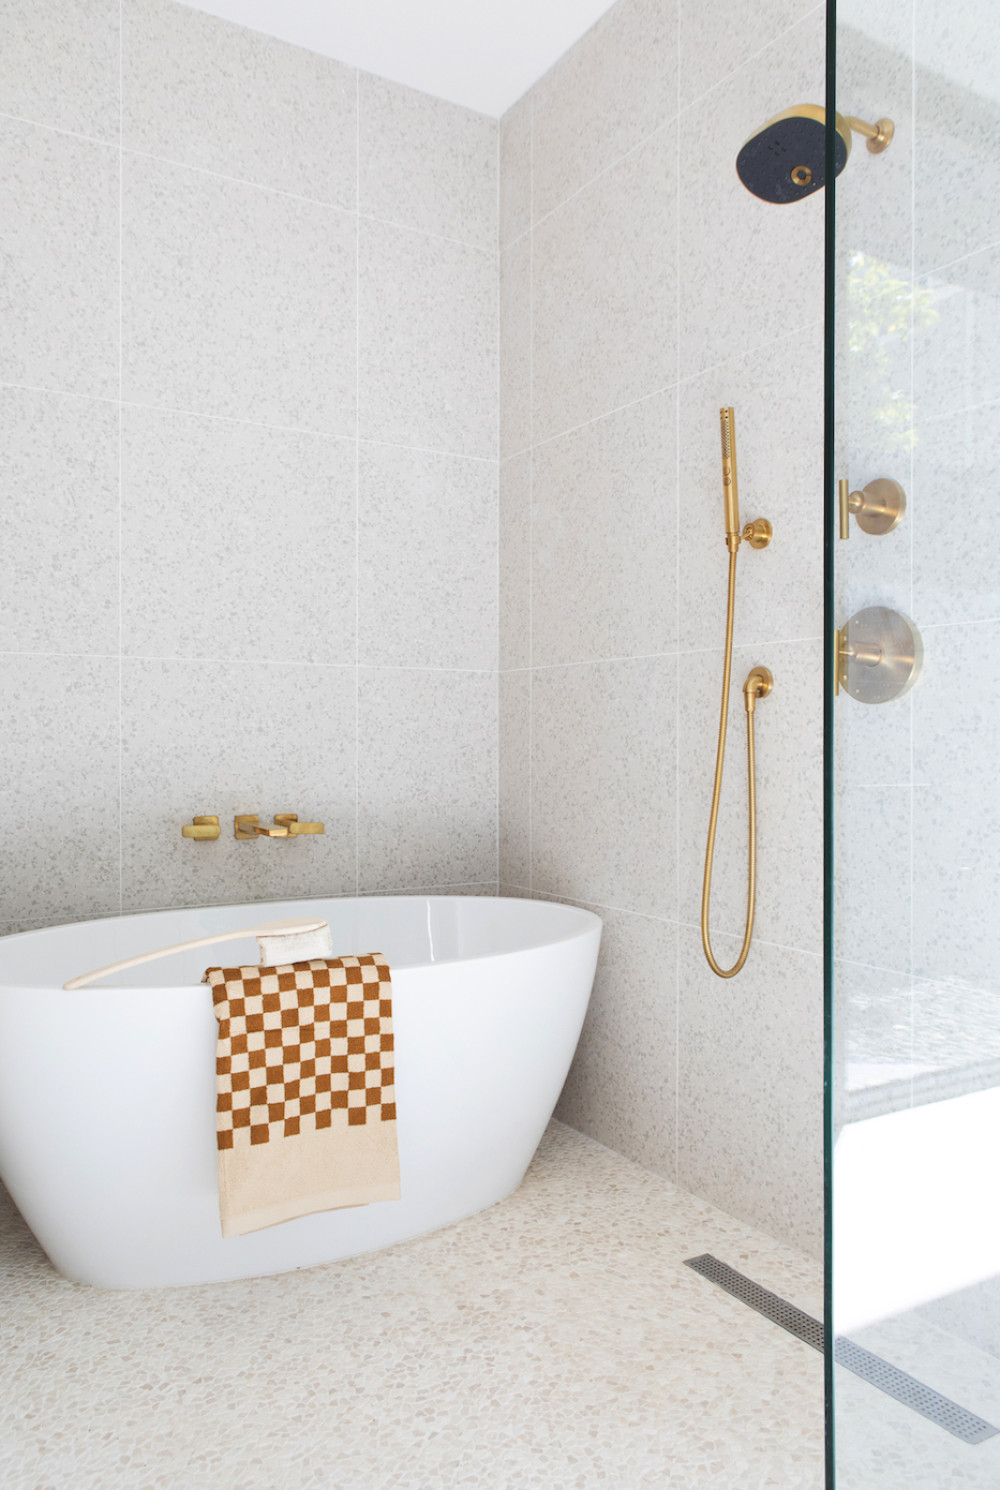 beyond-interior-design-white-tub-bathroom-dallas-tx